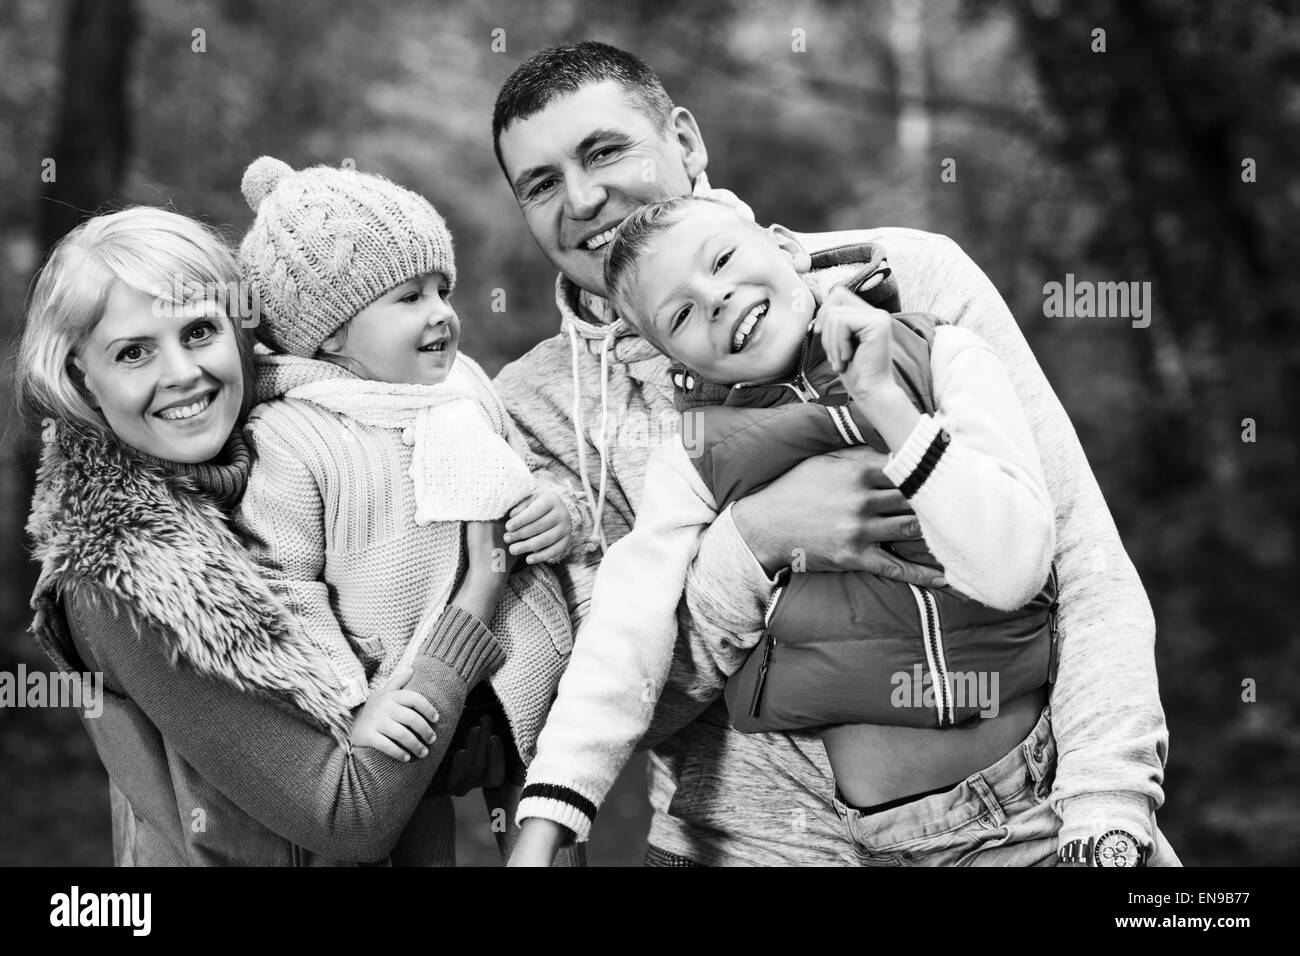 Family in the autumn park Stock Photo